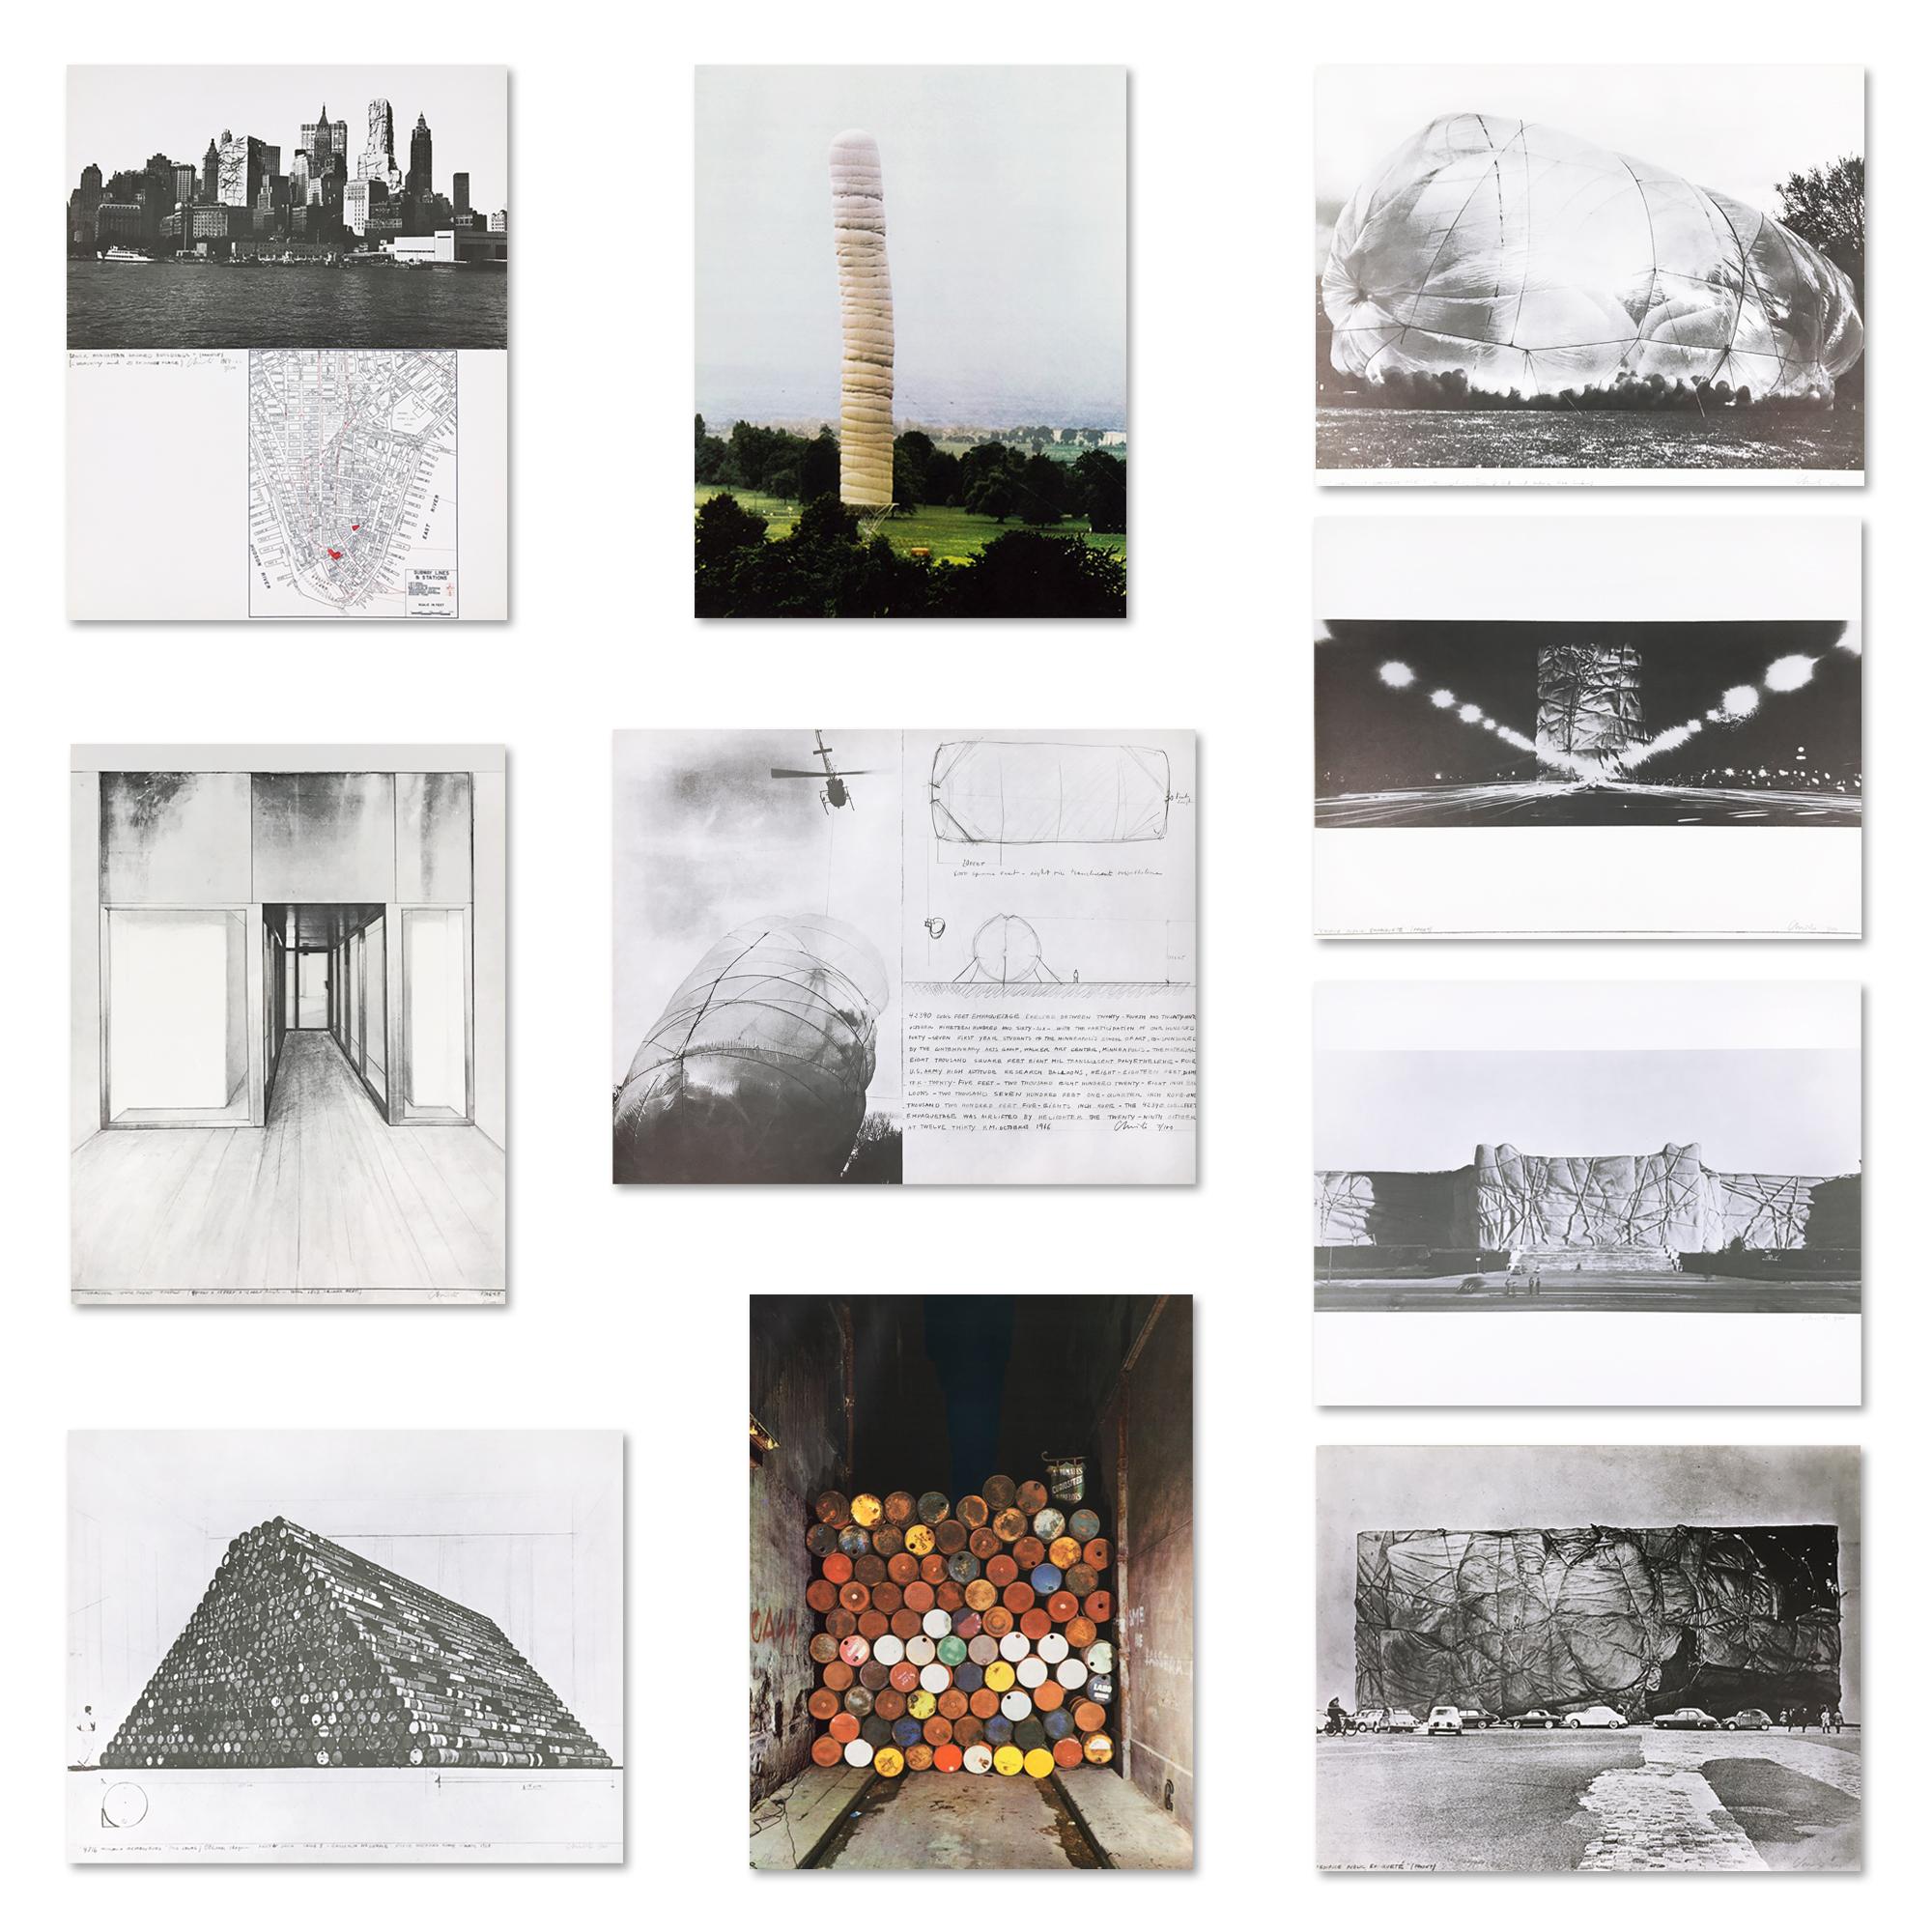 Christo and Jeanne-Claude Figurative Sculpture - Monuments, Portfolio with 10 Prints and Sculpture, Documenta, Concept Art